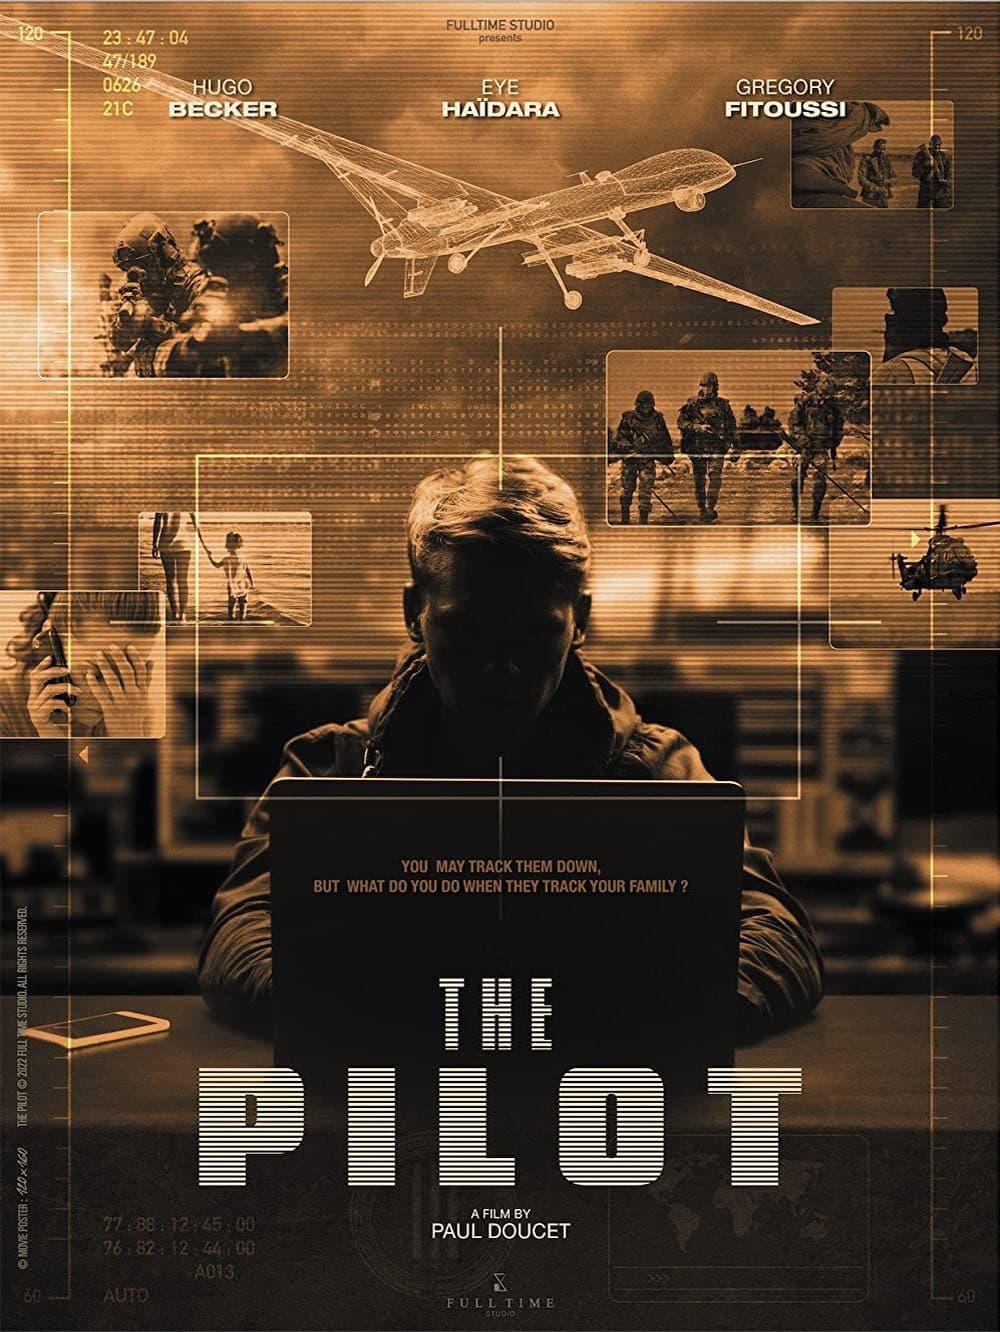 The Pilot poster